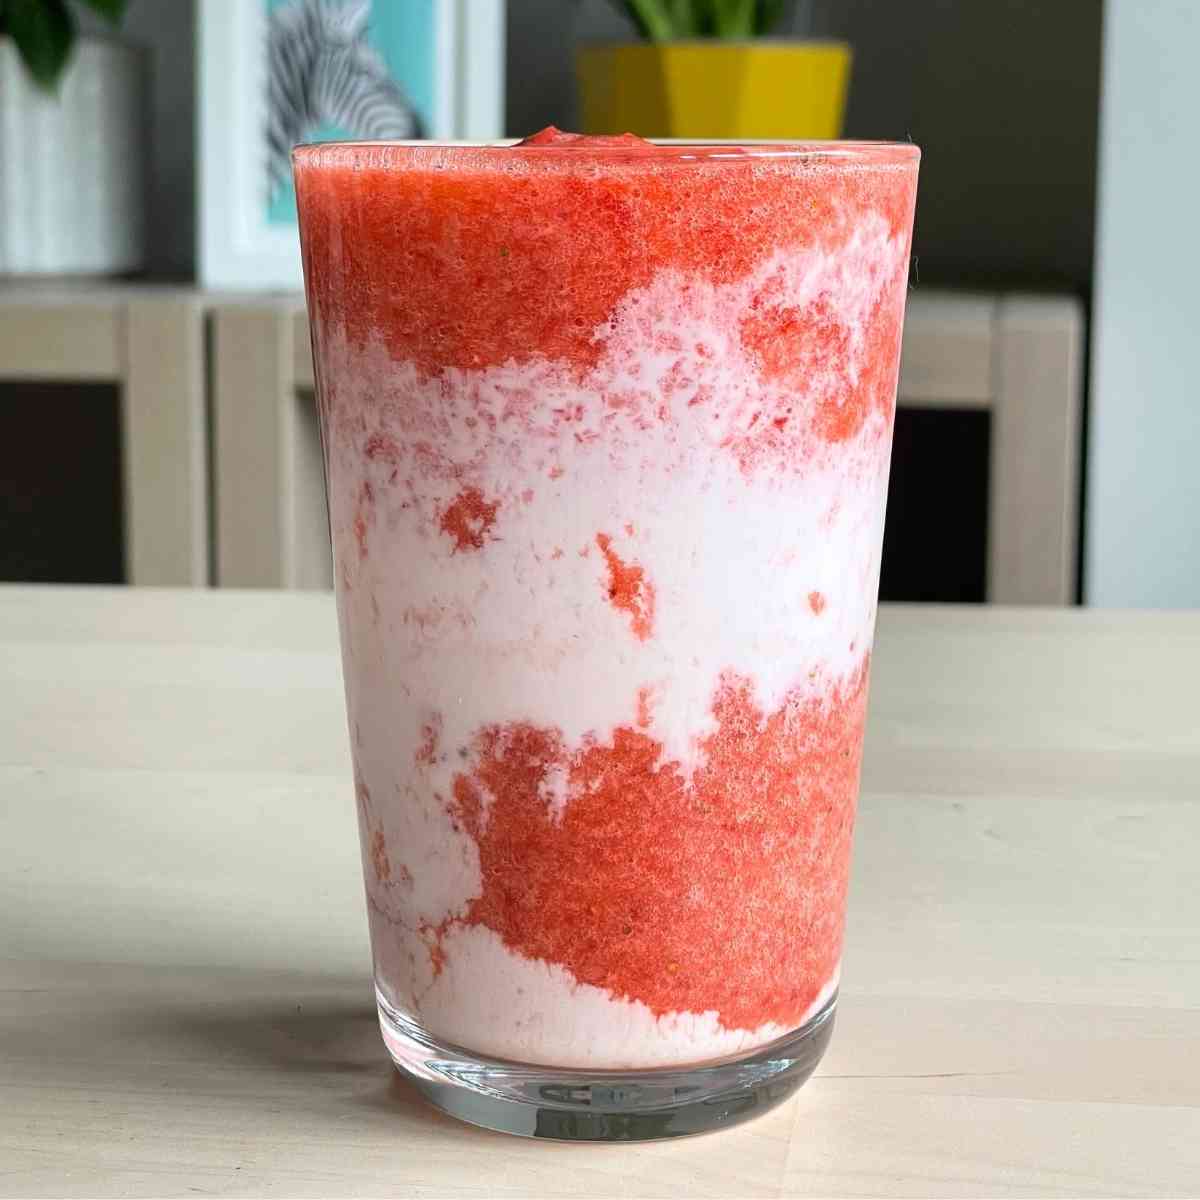 Korean strawberry milk recipe layers